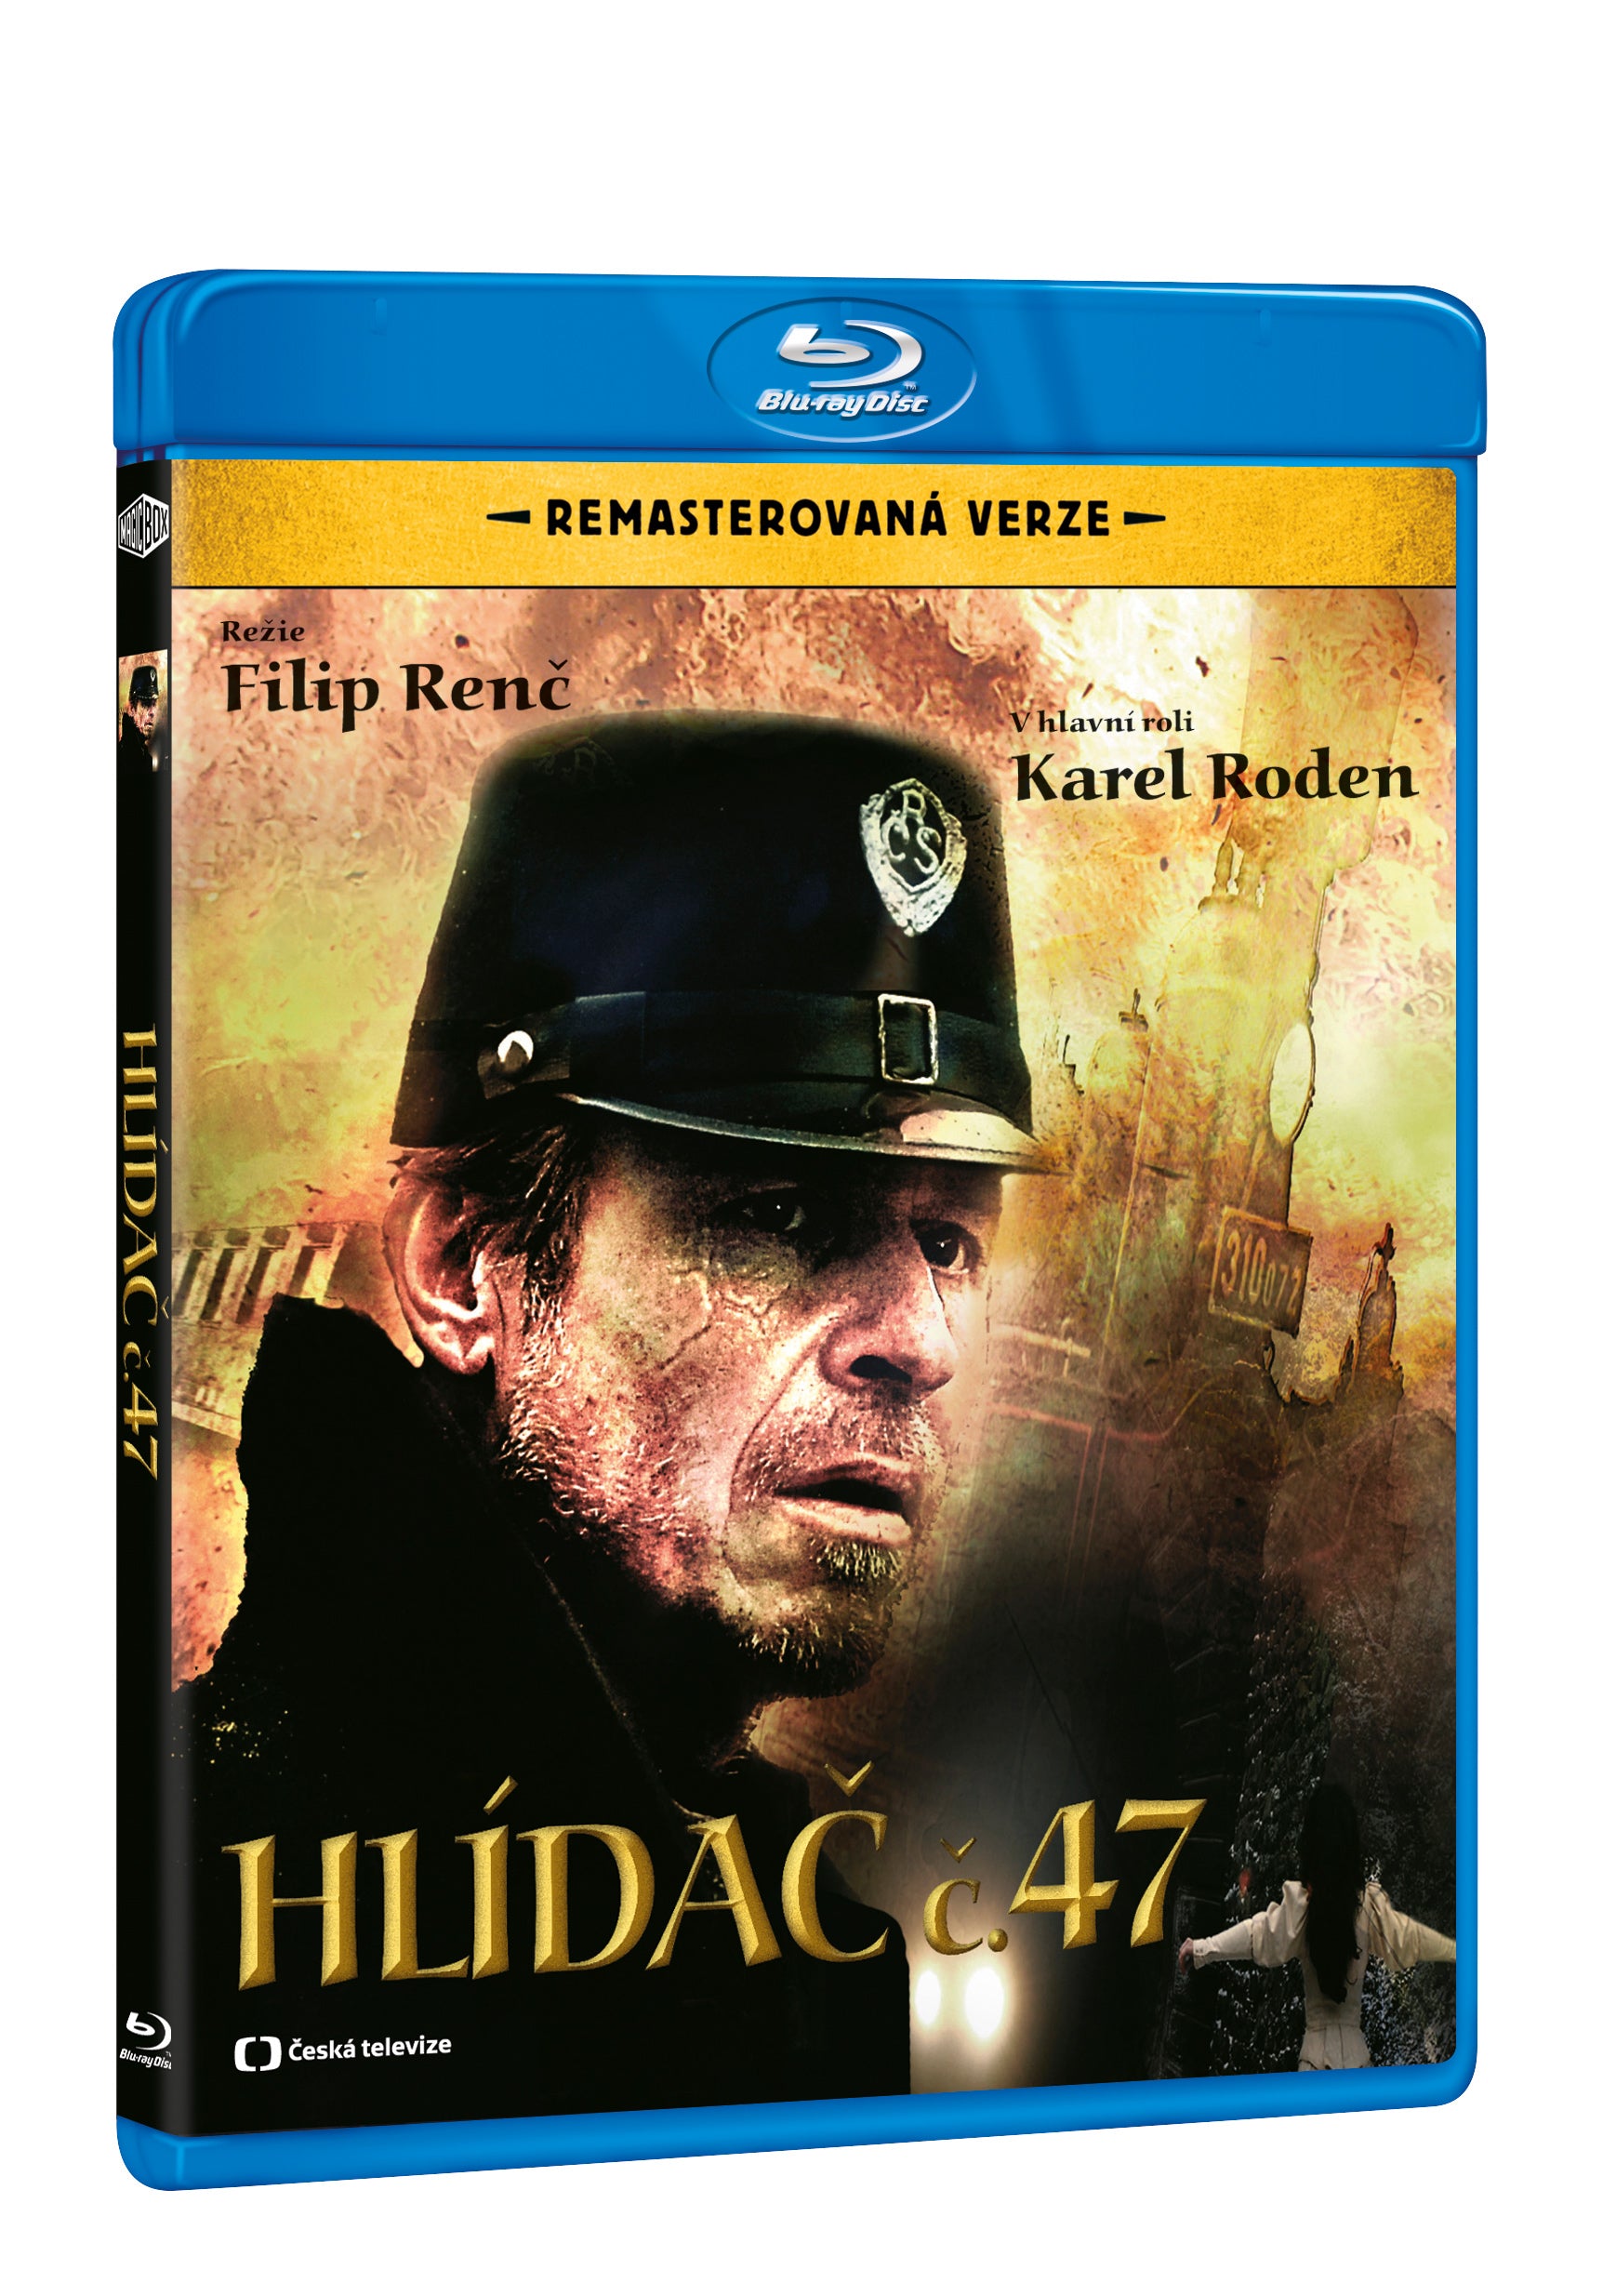 Hlidac c. 47 BD (remasterovana verze) / Hlidac c. 47 - Czech version